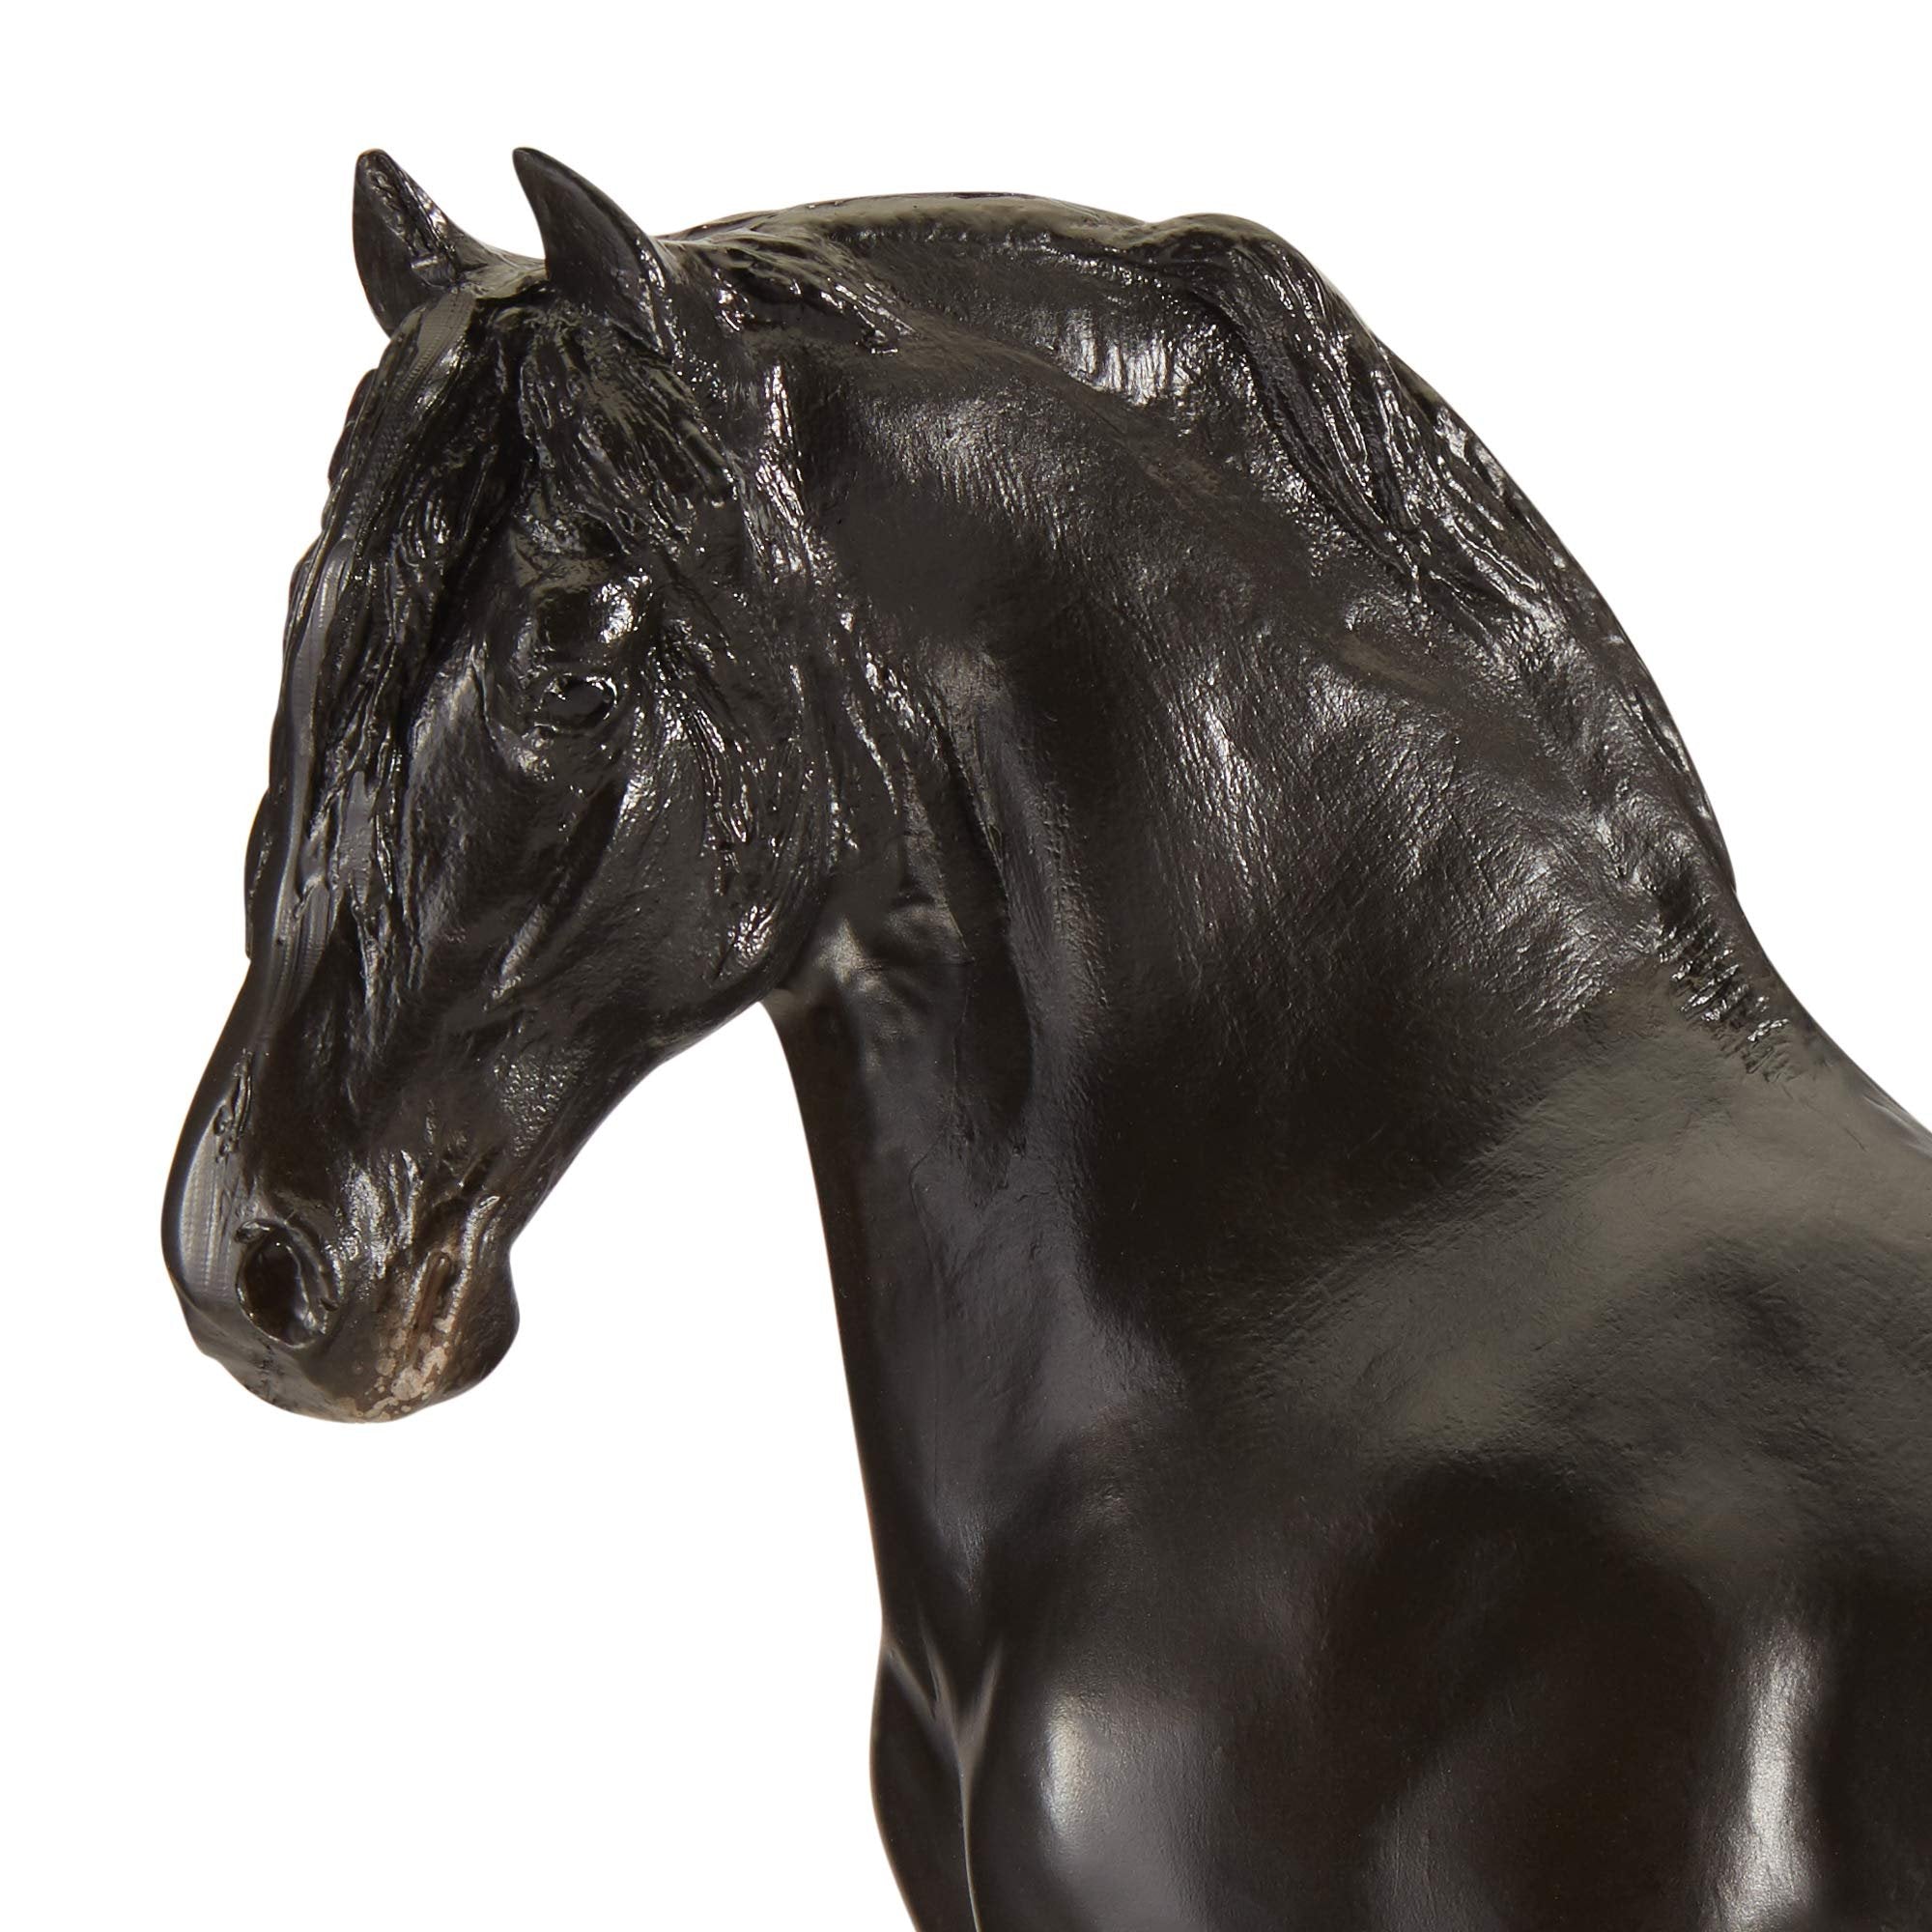 Breyer Traditional Series Harley Harlequin Draft Tack Pony | Horse Toy Model | 1:9 Scale | Model #1805,Black, White